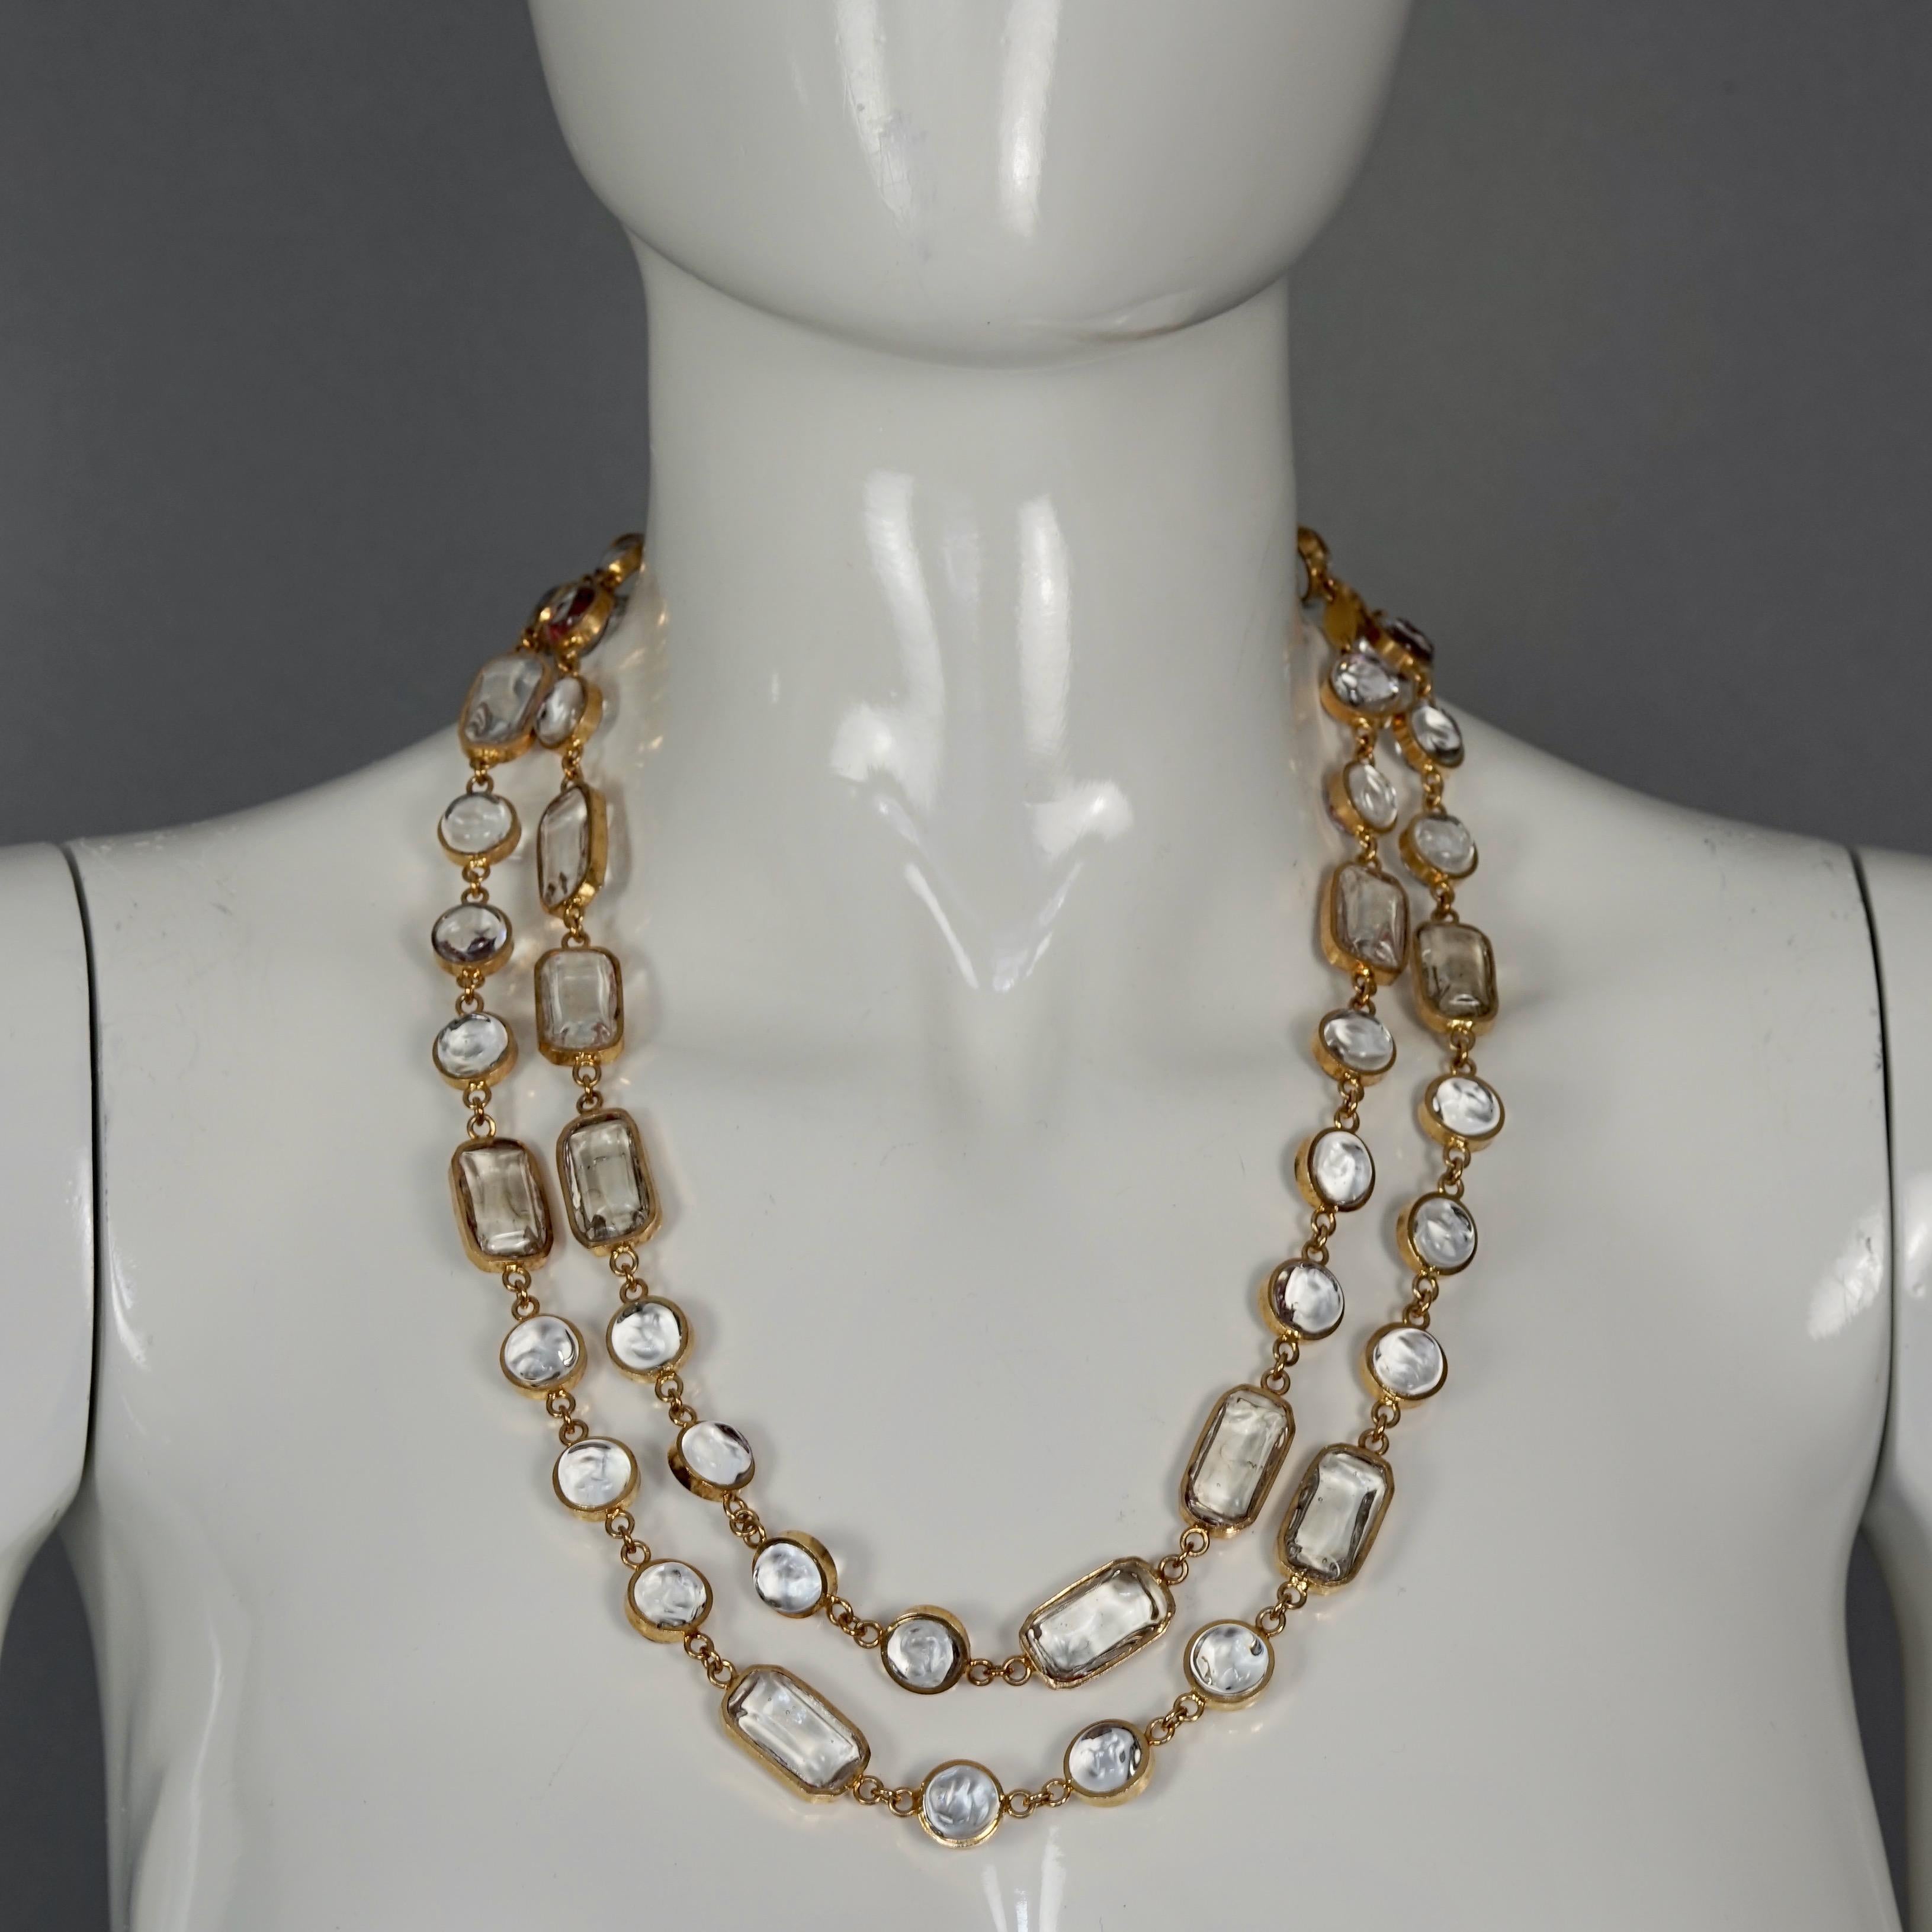 Vintage CHANEL GRIPOIX Chicklet Glass Link Long Necklace

Measurements:
Rectangular Width: 0.53 inch (1.35 cm)
Wearable Length: 48.42 inches (123 cm)

Features:
- 100% Authentic CHANEL.
- Clear Gripoix/ glass poured link necklace.
- Gold tone